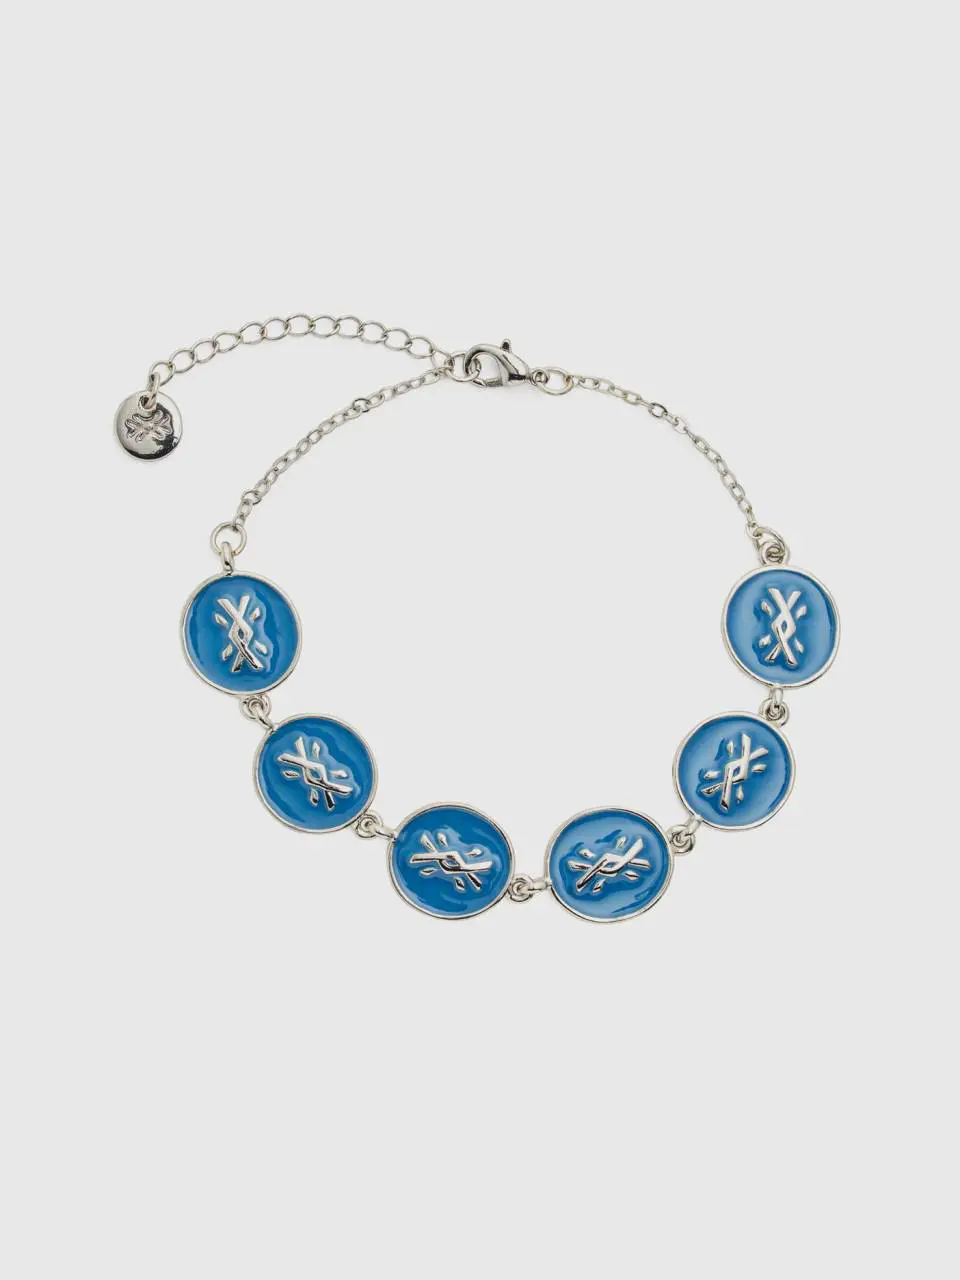 Benetton silver bracelet with sky blue pendants. 1